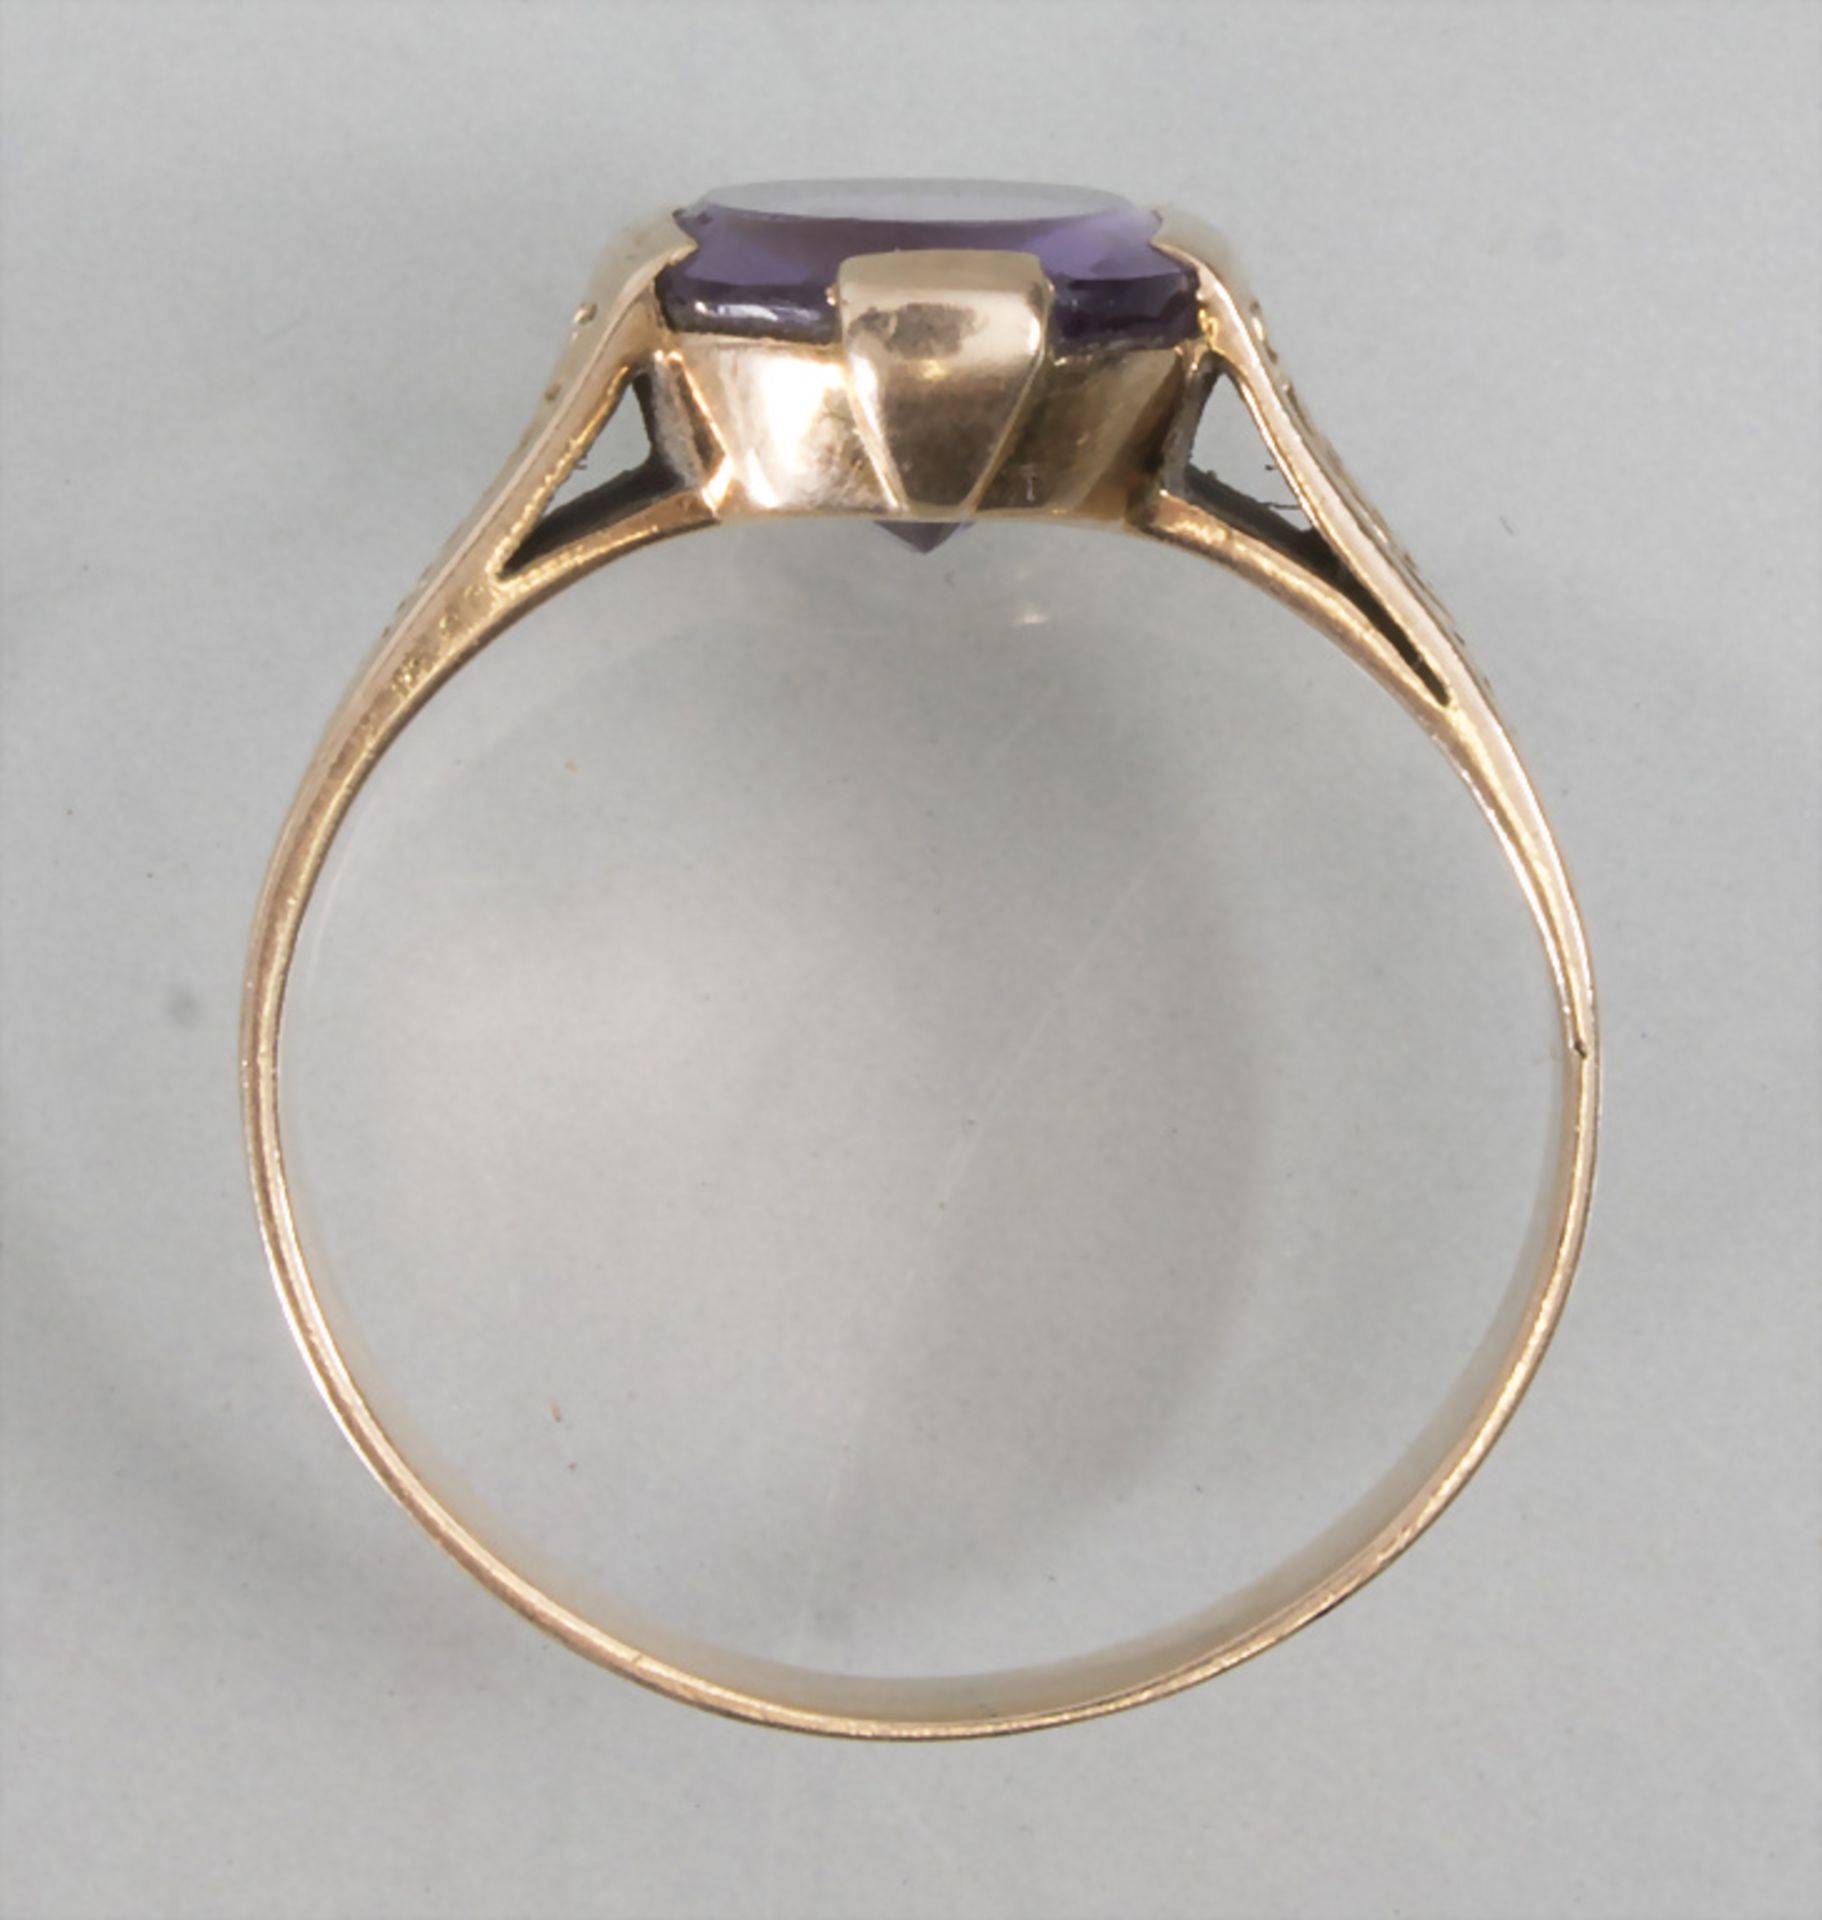 Damenring mit Amethyst / A ladies 14k gold ring with amethyst - Bild 2 aus 2